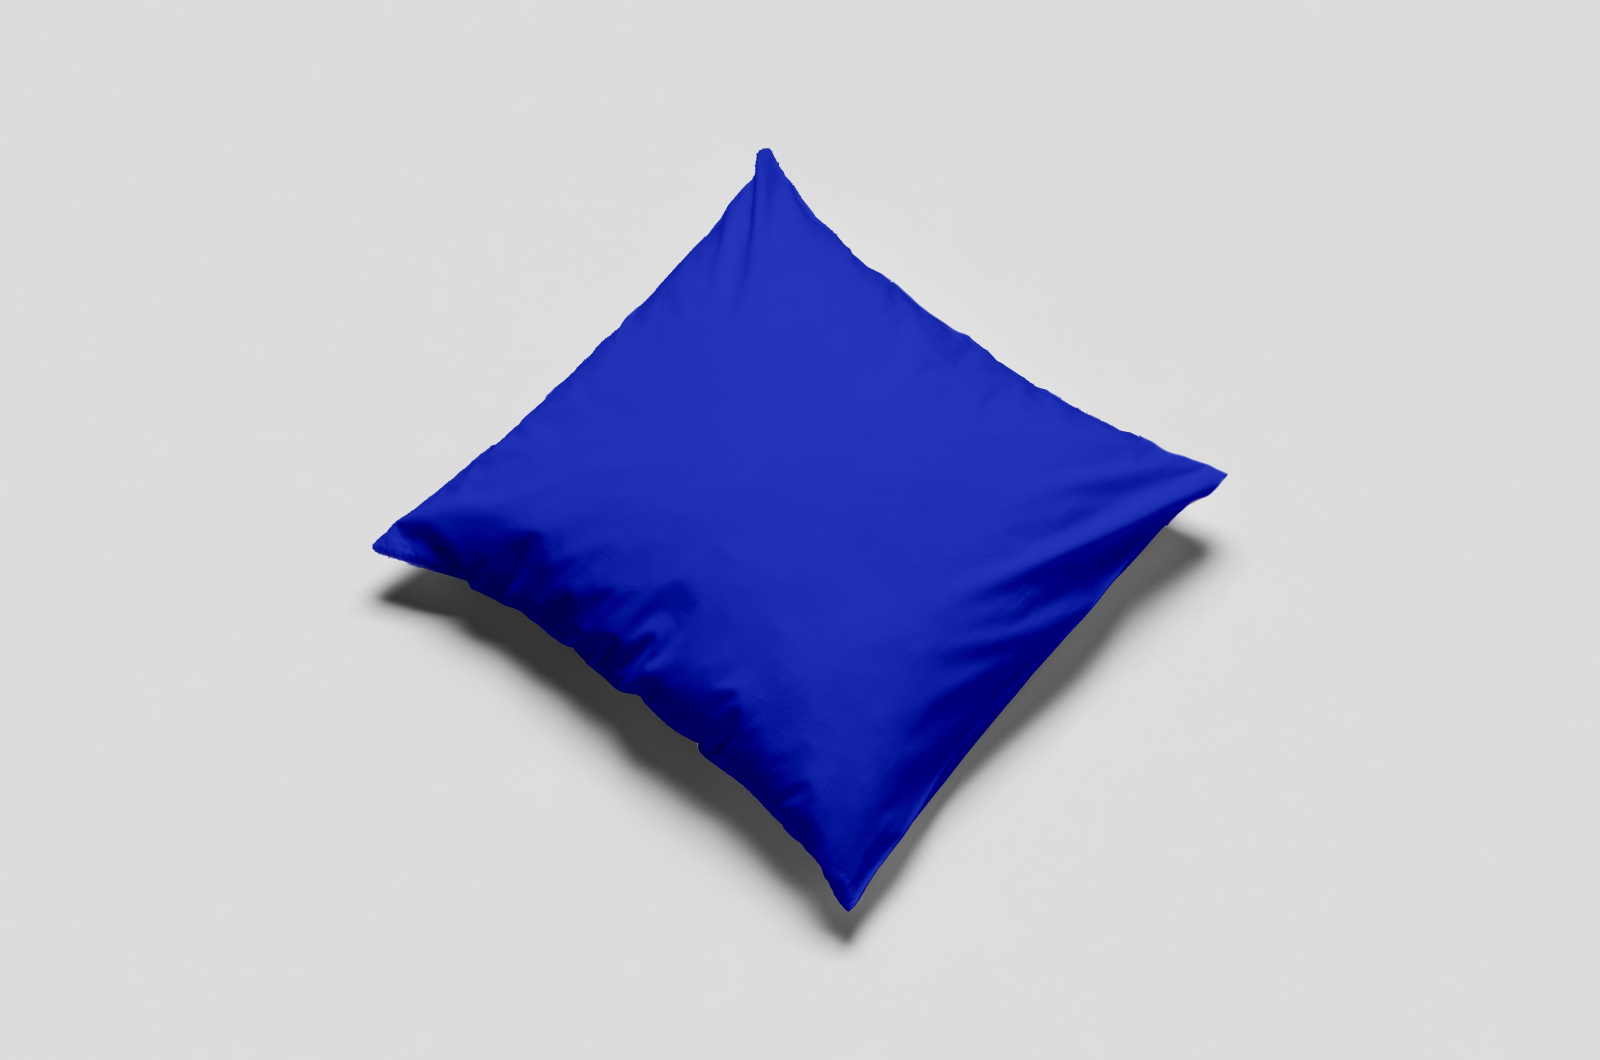 Komplettkissen Baumwolle Linon-Blau / 30x30 cm